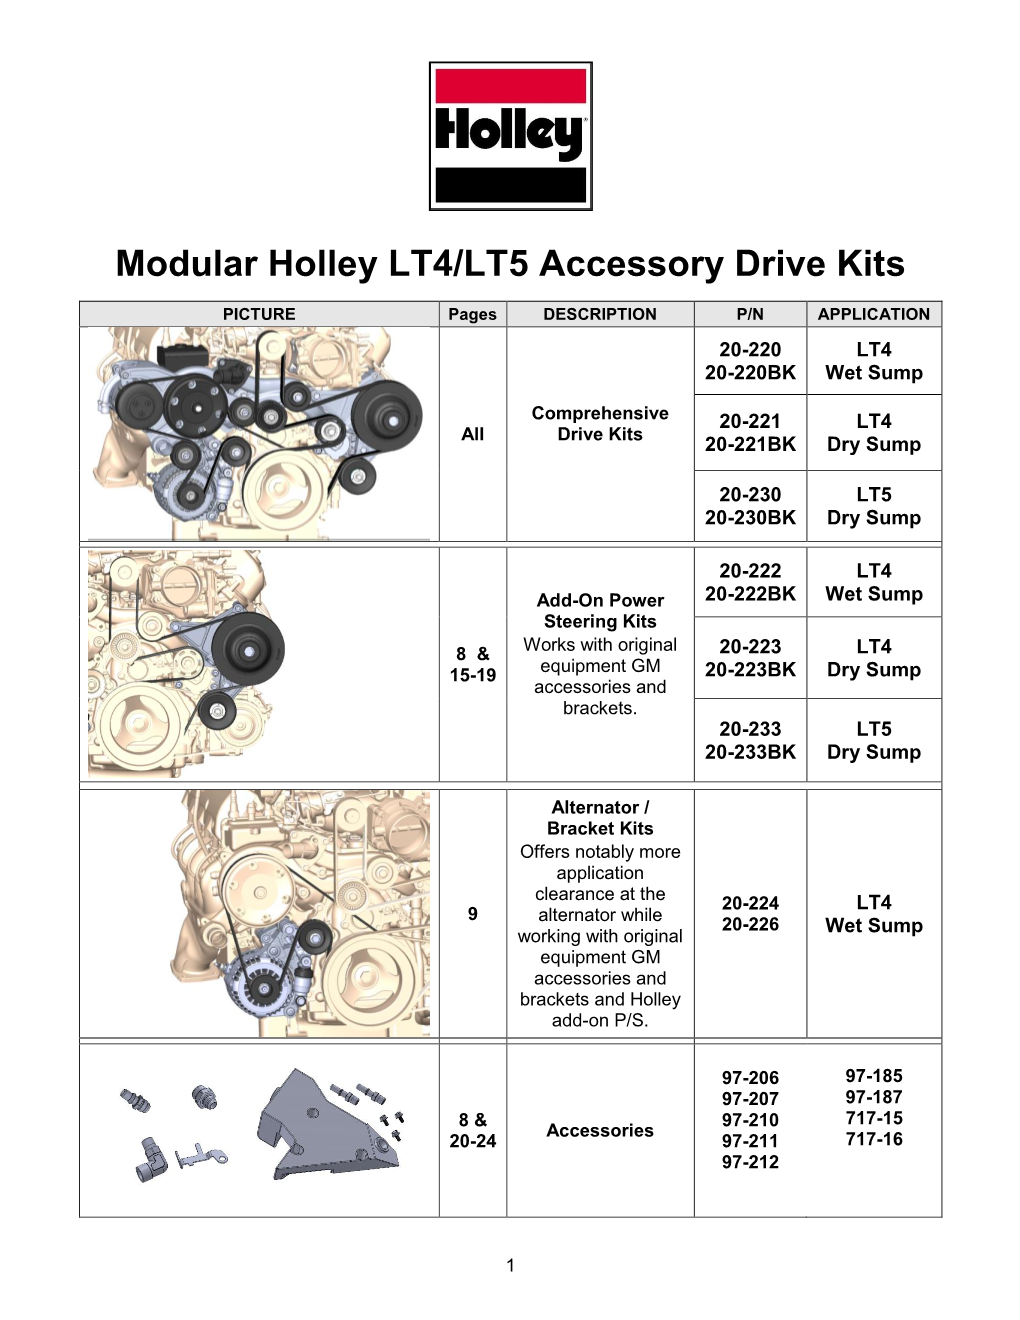 Modular Holley LT4/LT5 Accessory Drive Kits